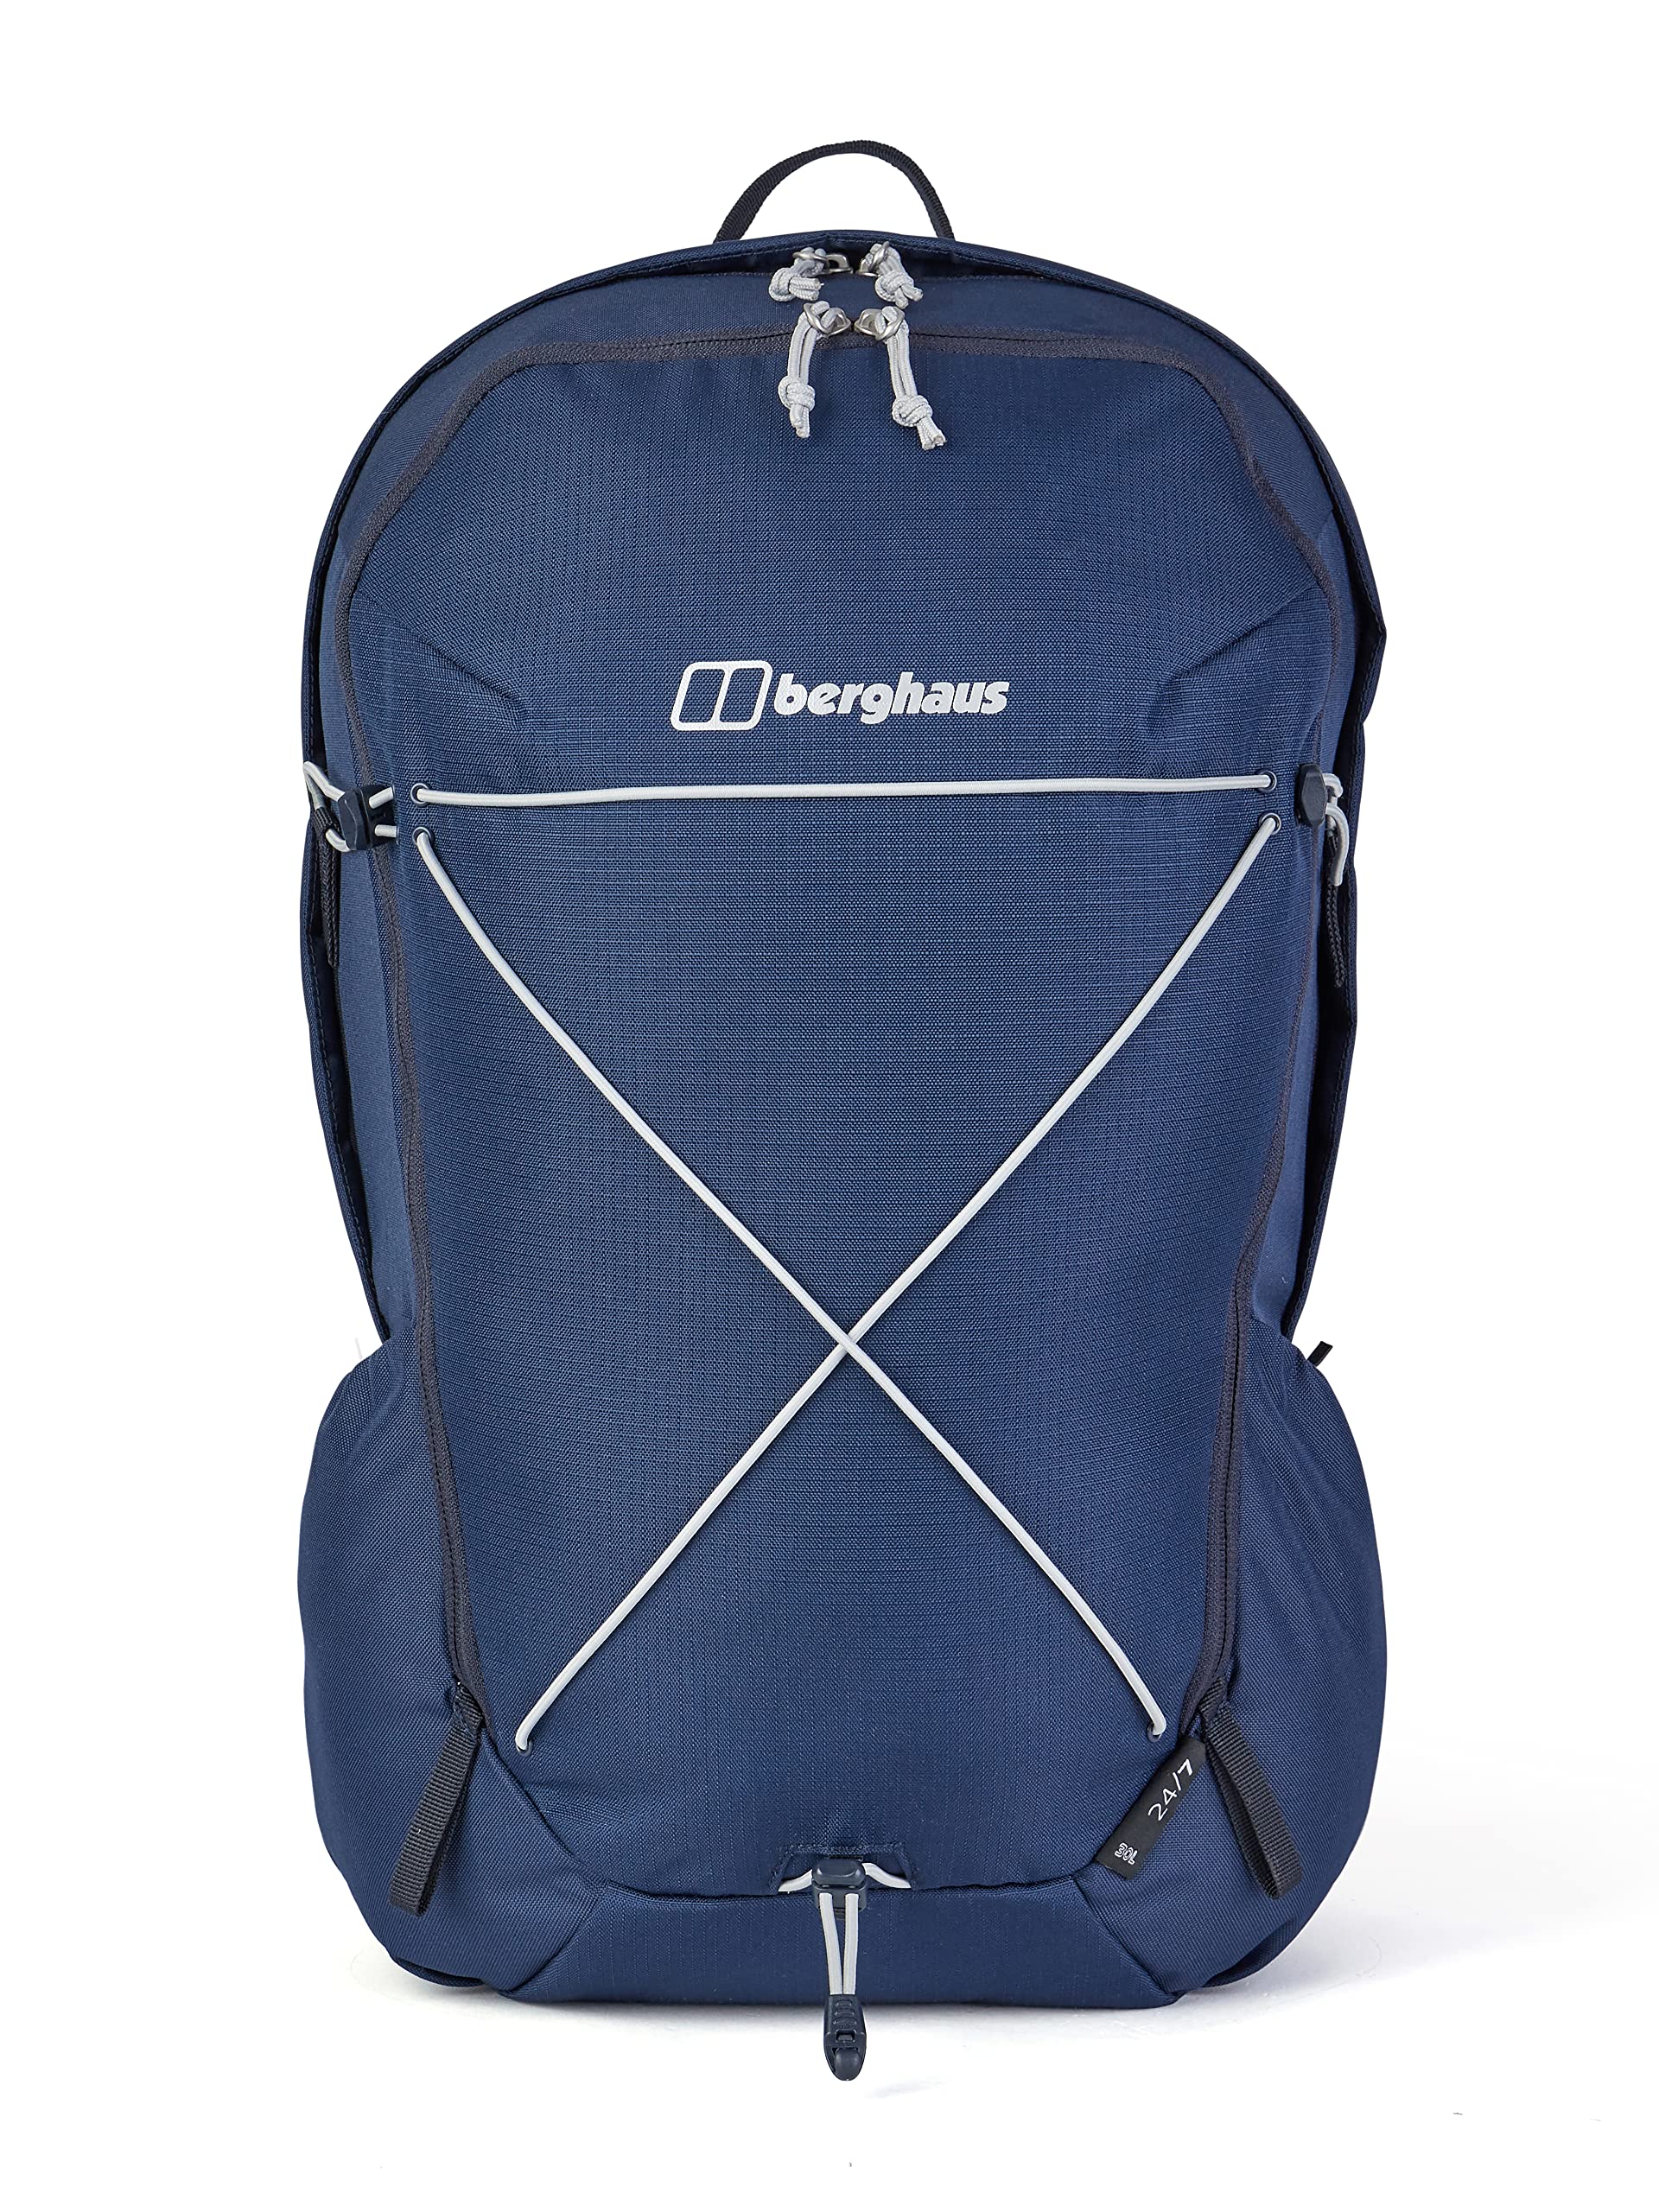 Berghaus 24/7 Backpack 30 Litre, Comfortable Fit, Durable Design, Rucksack for Men and Women